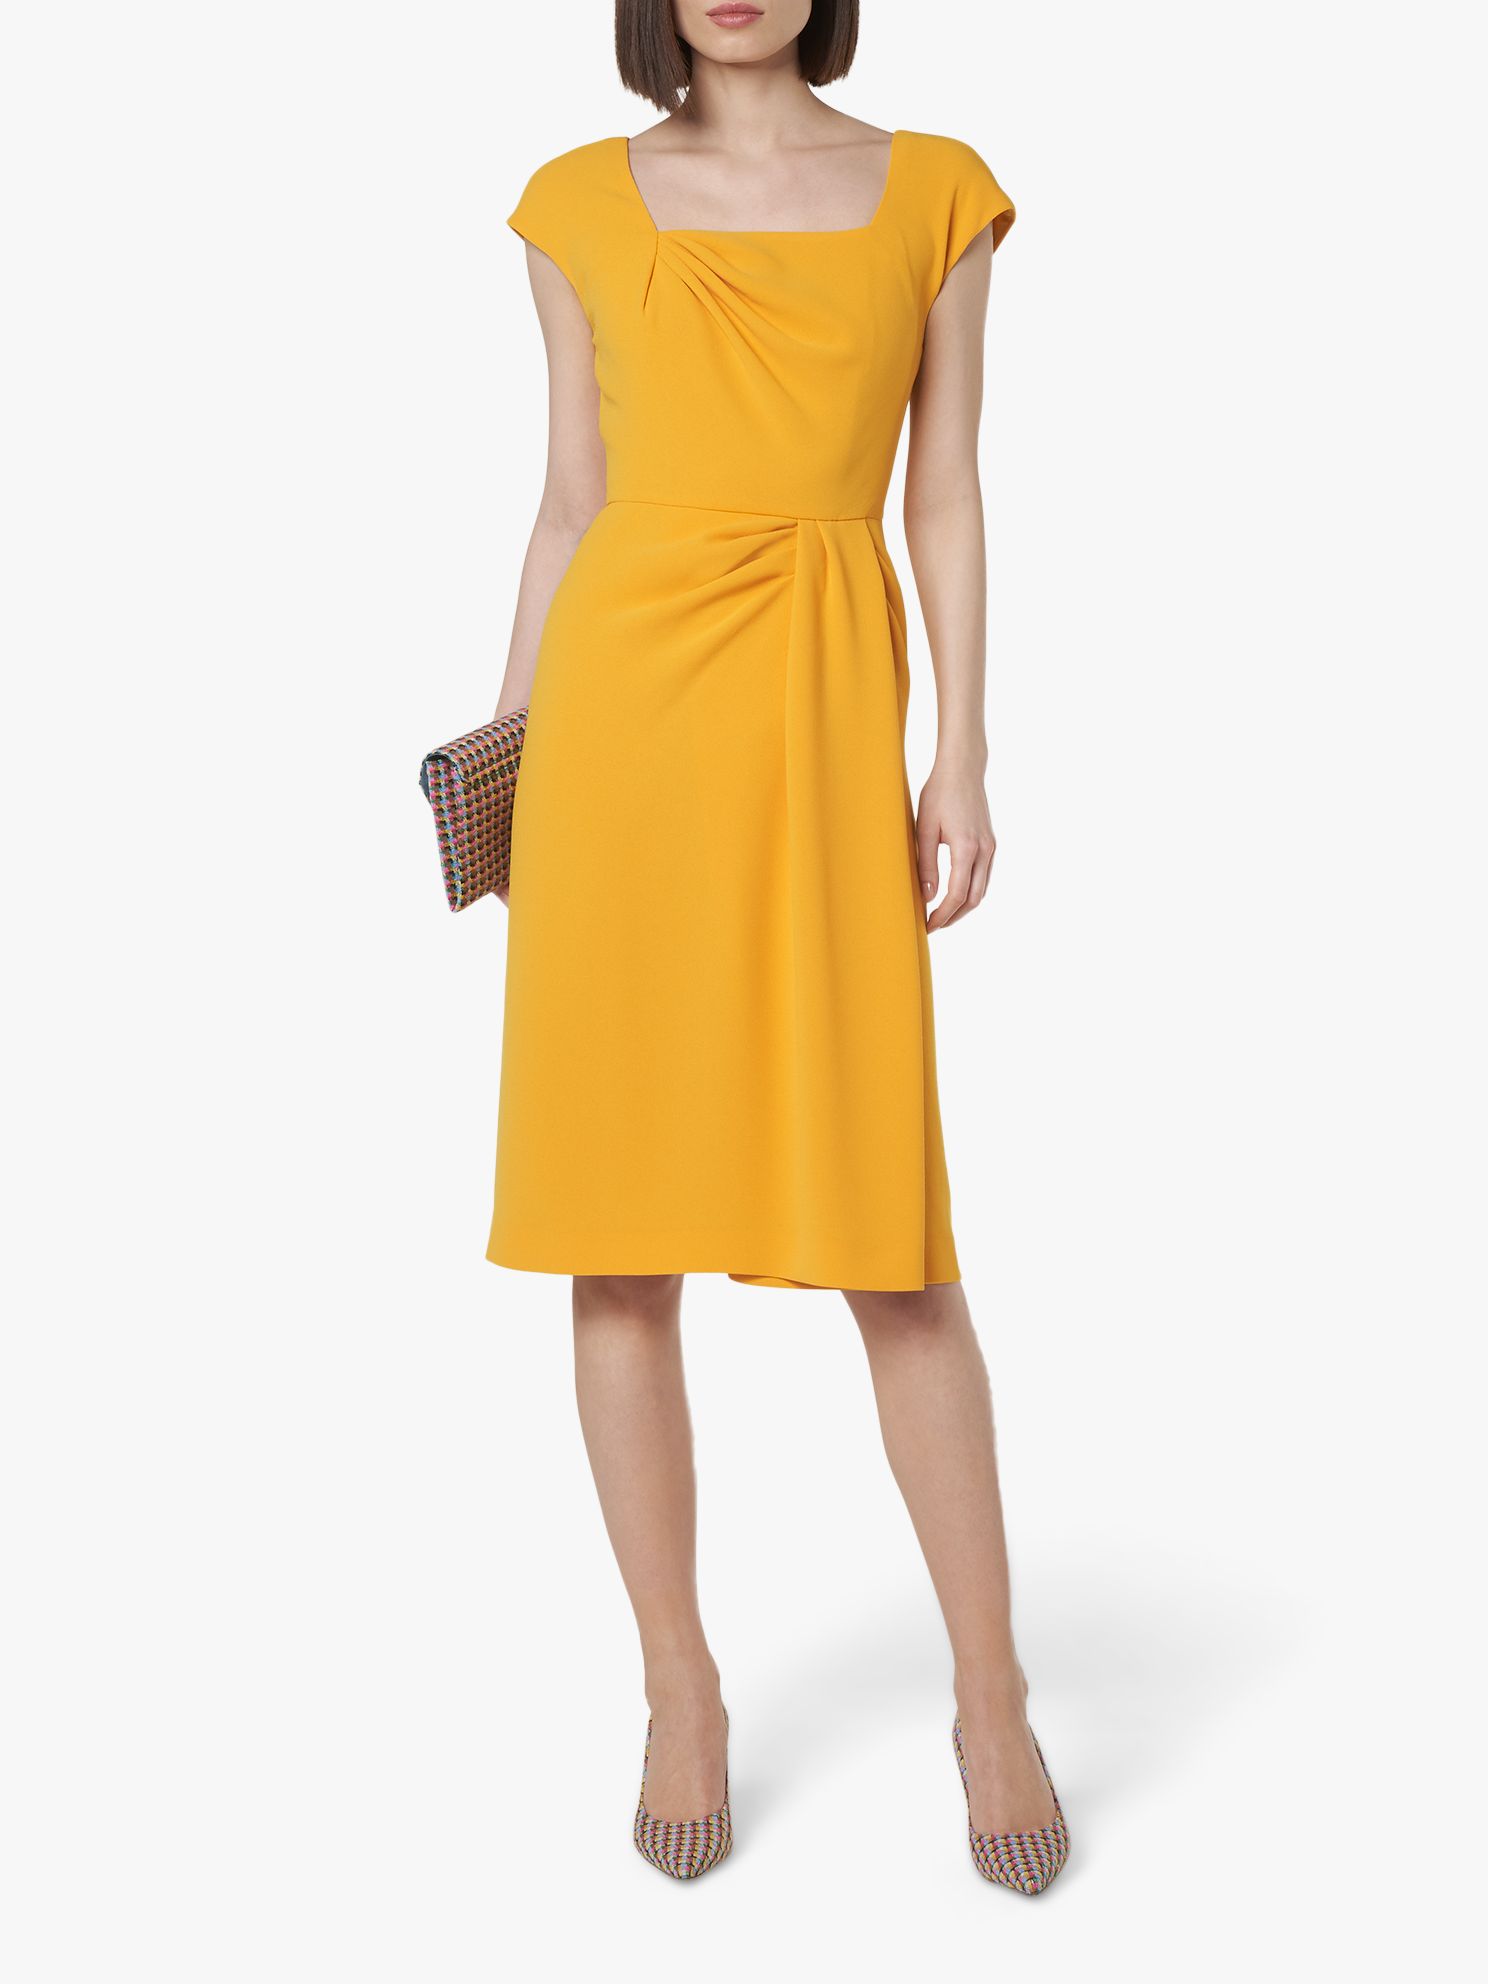 L K Bennett Denise Fitted Dress Yellow At John Lewis Partners